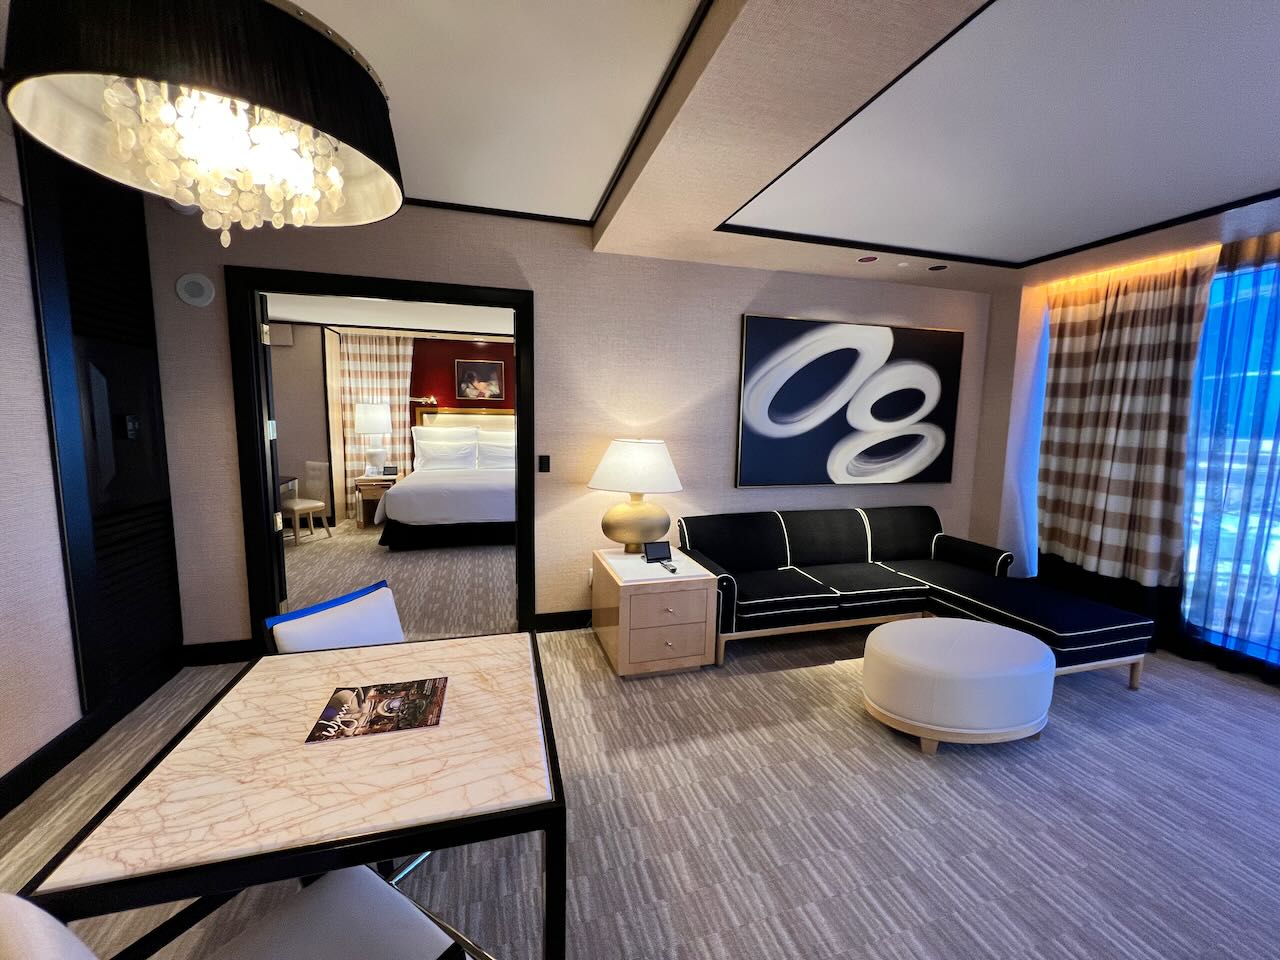 NEW Wynn Las Vegas Rooms – The OG Of Vegas Luxury